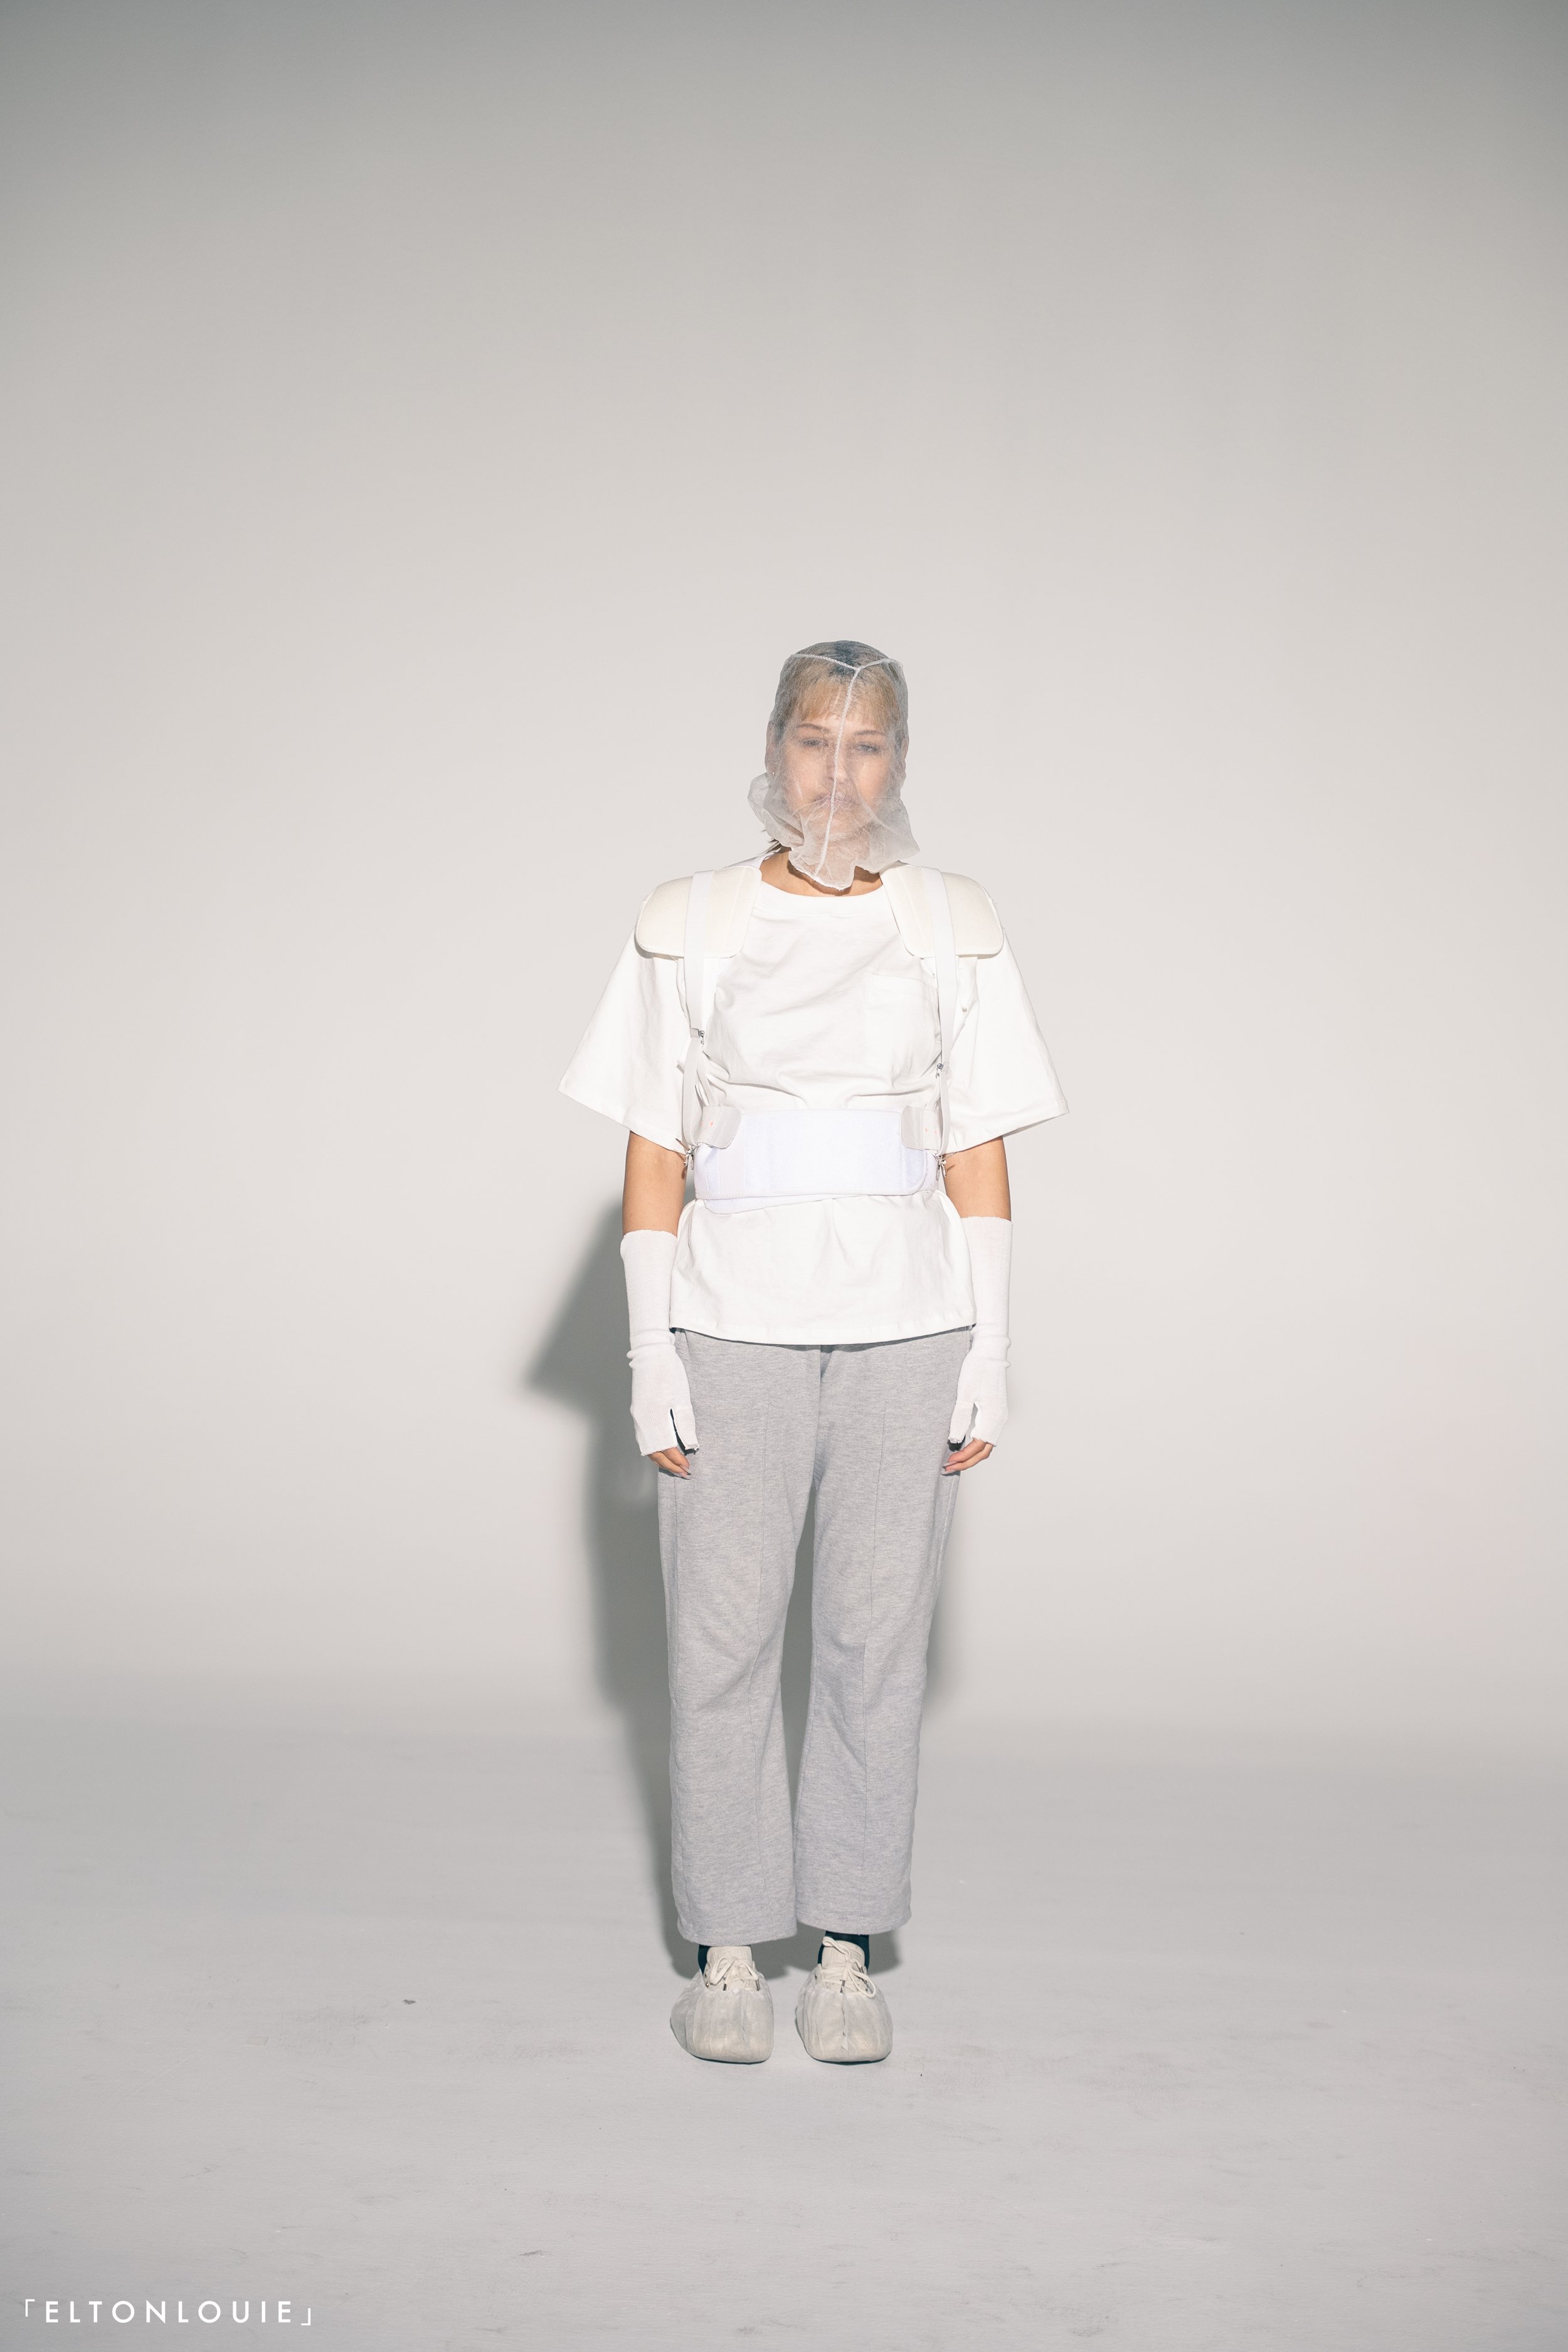 eltonlouie_fashion_designer_runway_exhibition_art_utilitywear_suspenders_backbrace_harness_P1013334.jpg